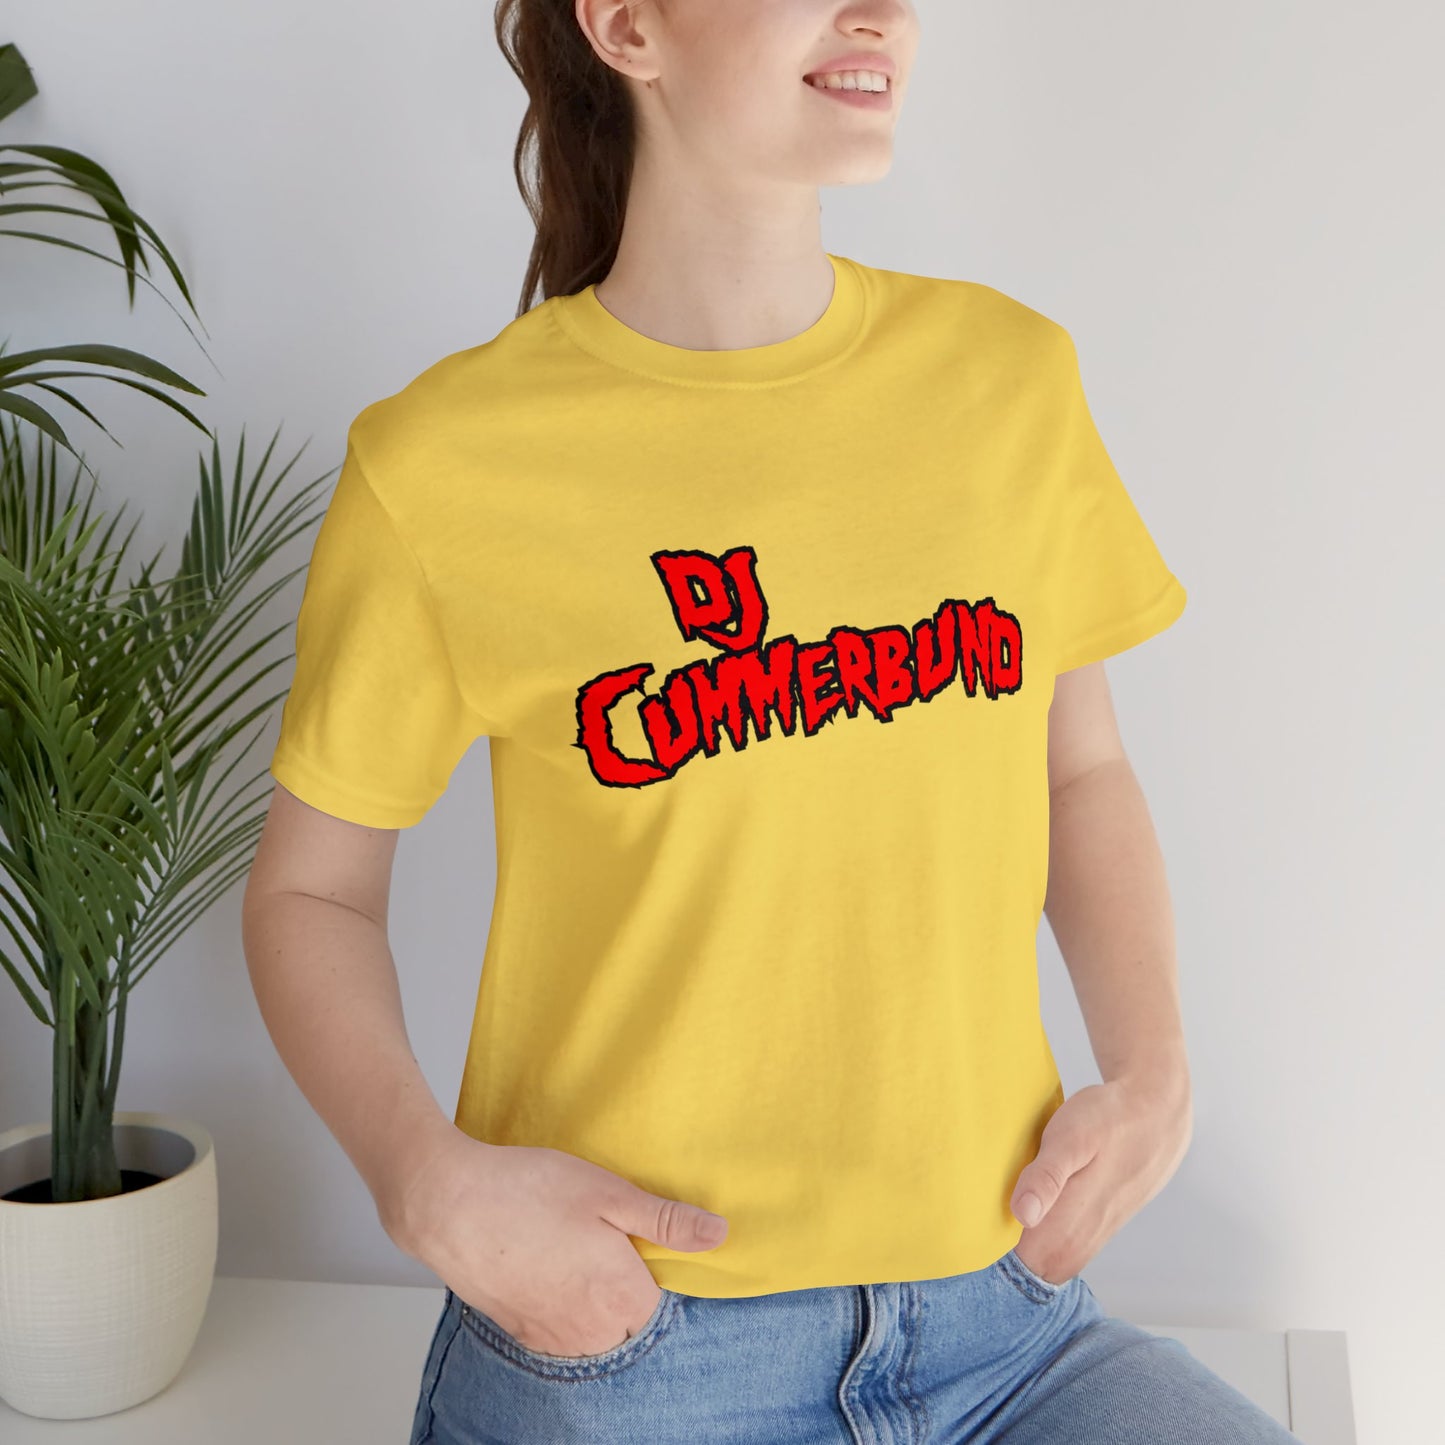 Bundamania Yellow T-Shirt